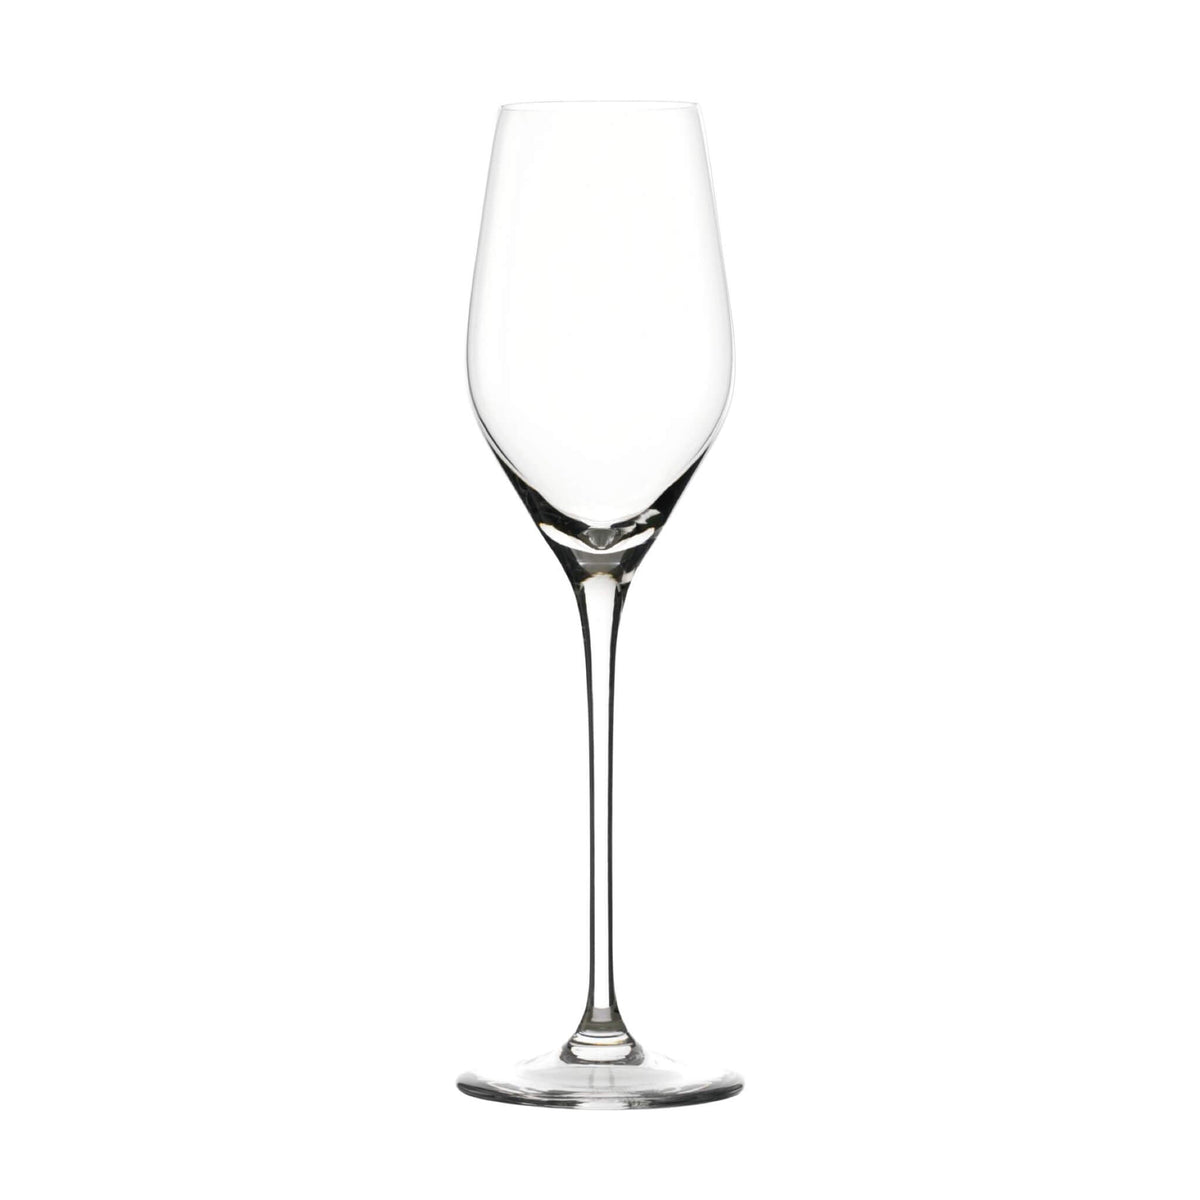 Josef Glas-Glas-Gläser & Accessoires-Ilios Champagnerglas (6 Stk.)-WINECOM